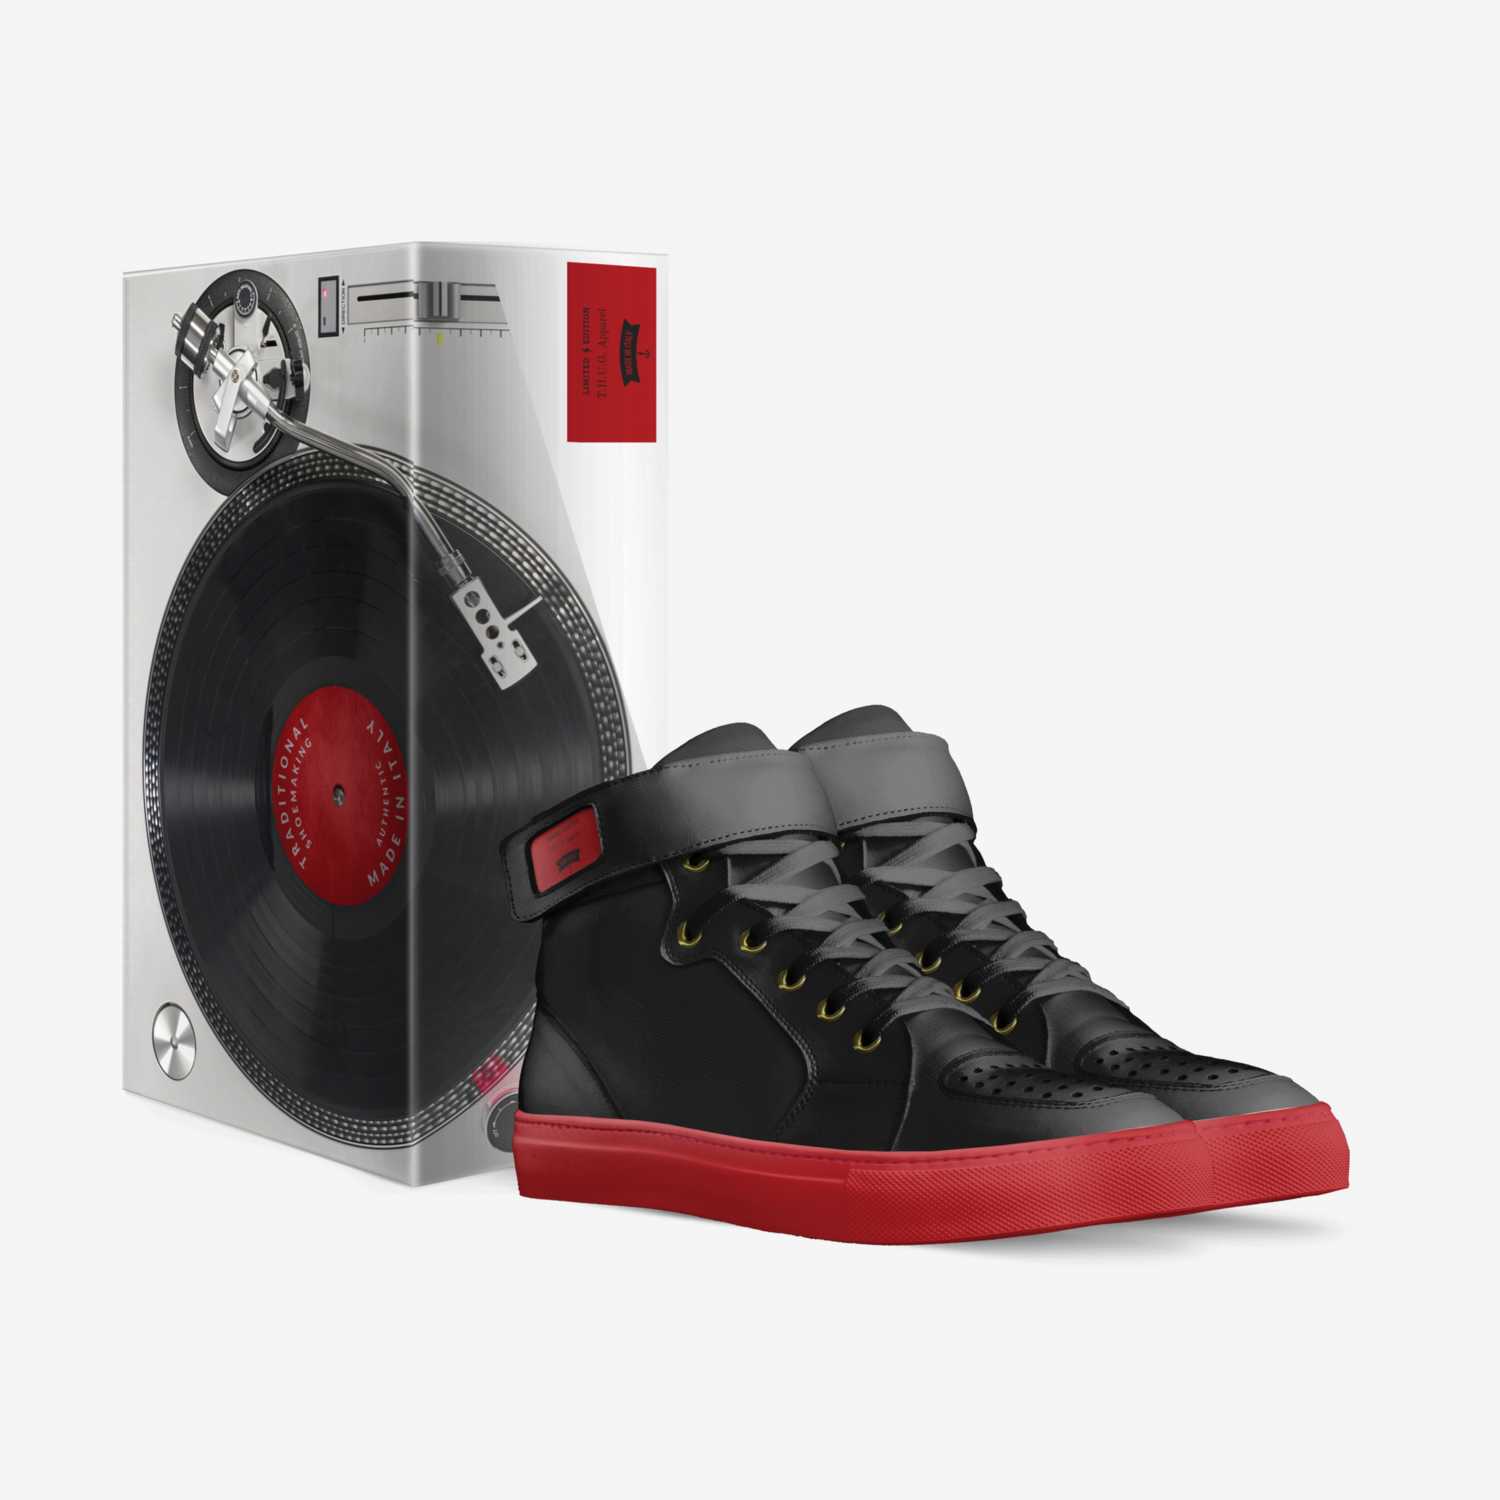 T.H.U.G. Apparel custom made in Italy shoes by David Wynn | Box view